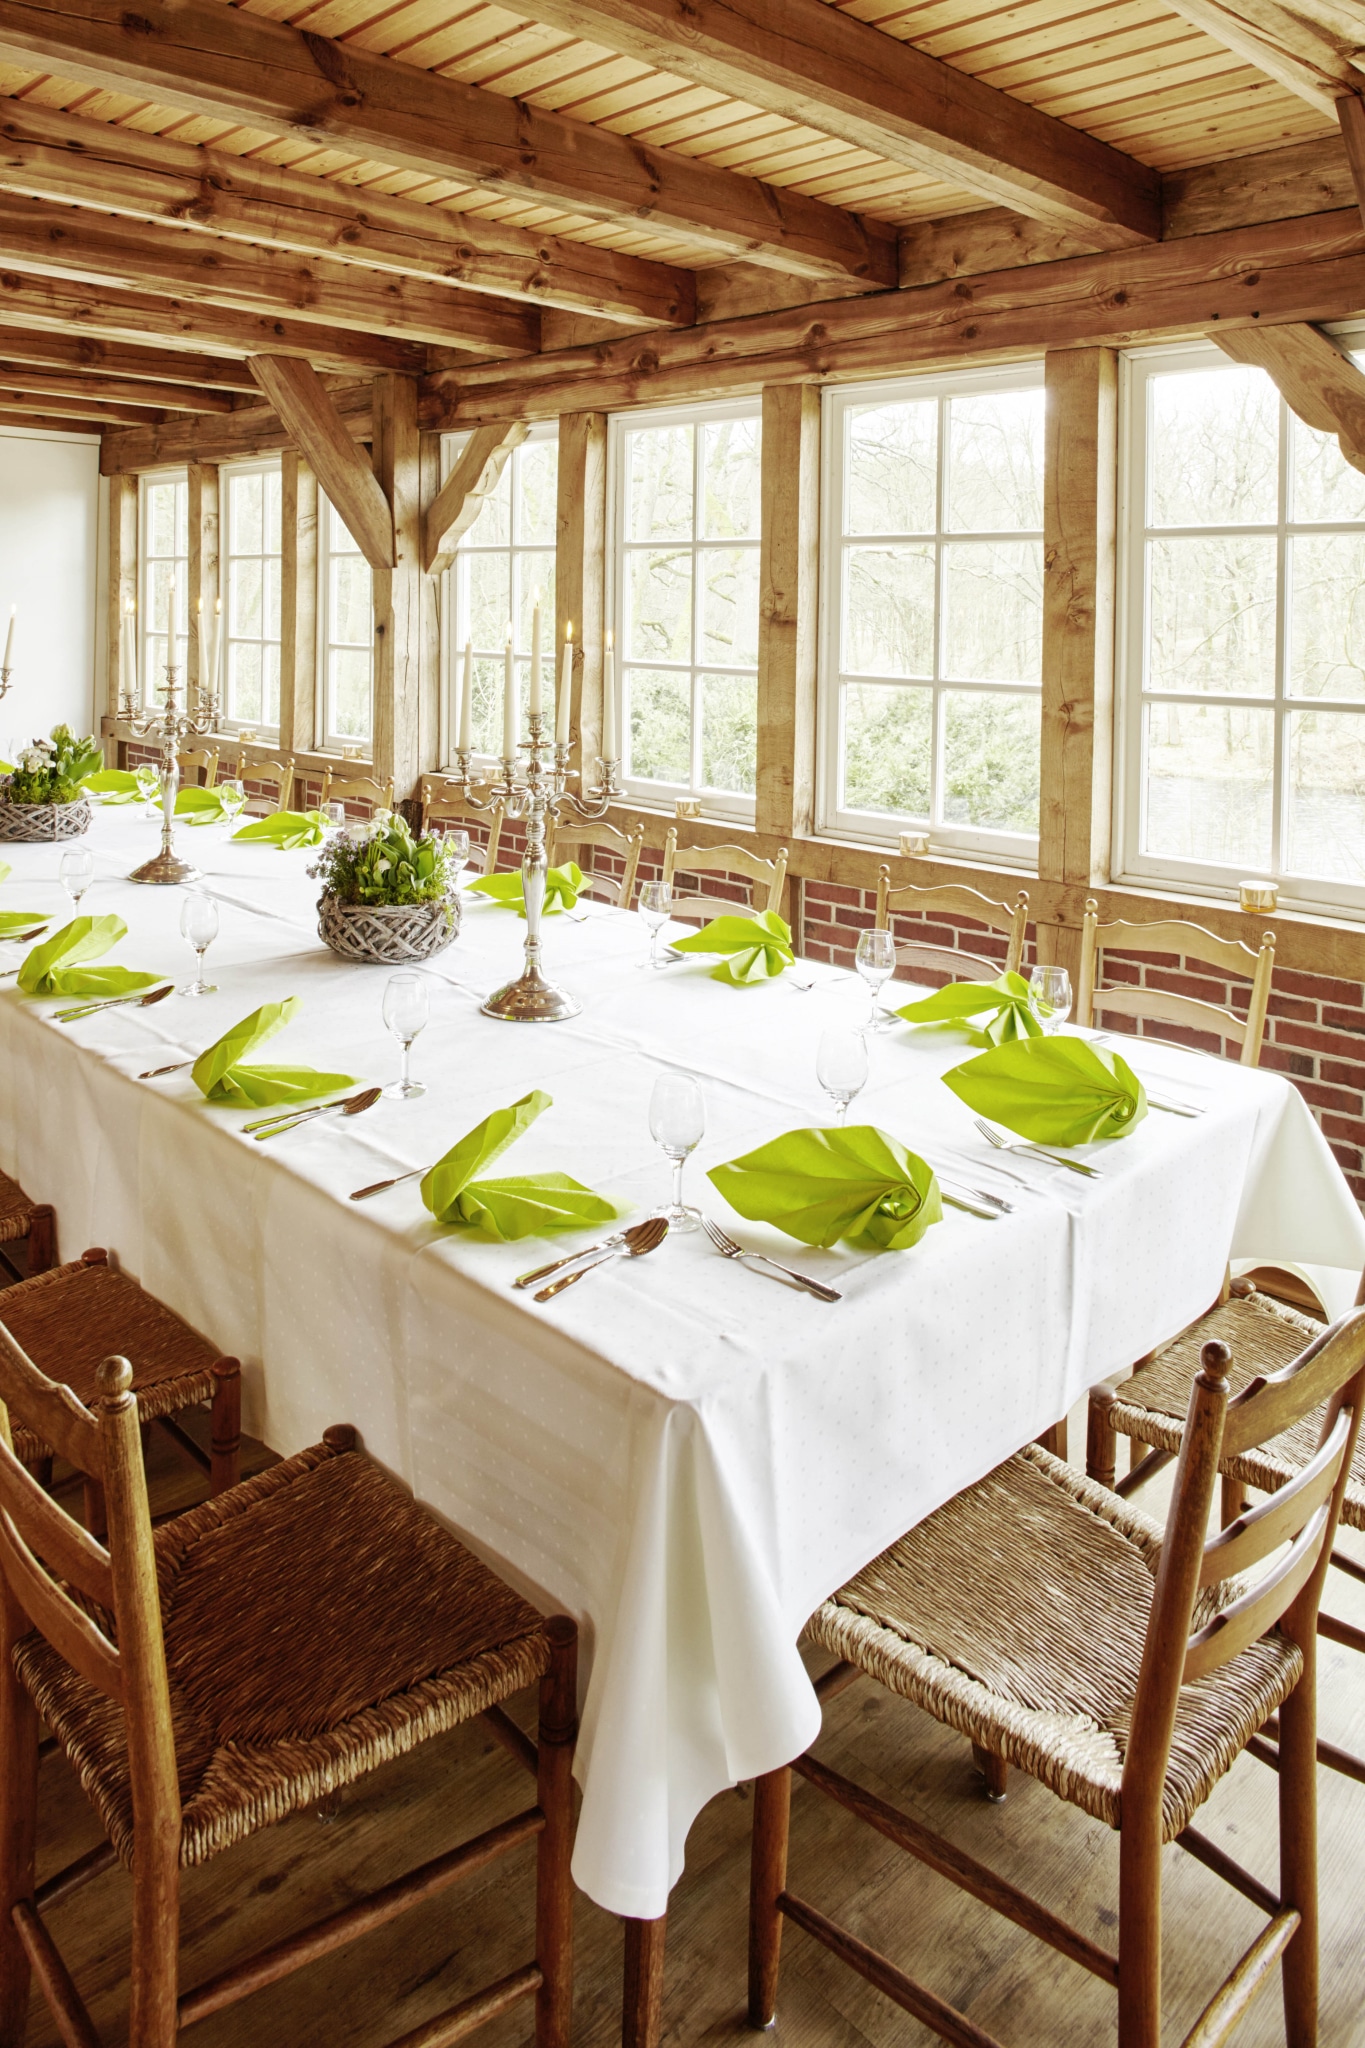 Celebrating at Landhaus Haverbeckhof: Long banquet table | Photo: Christian Burmester